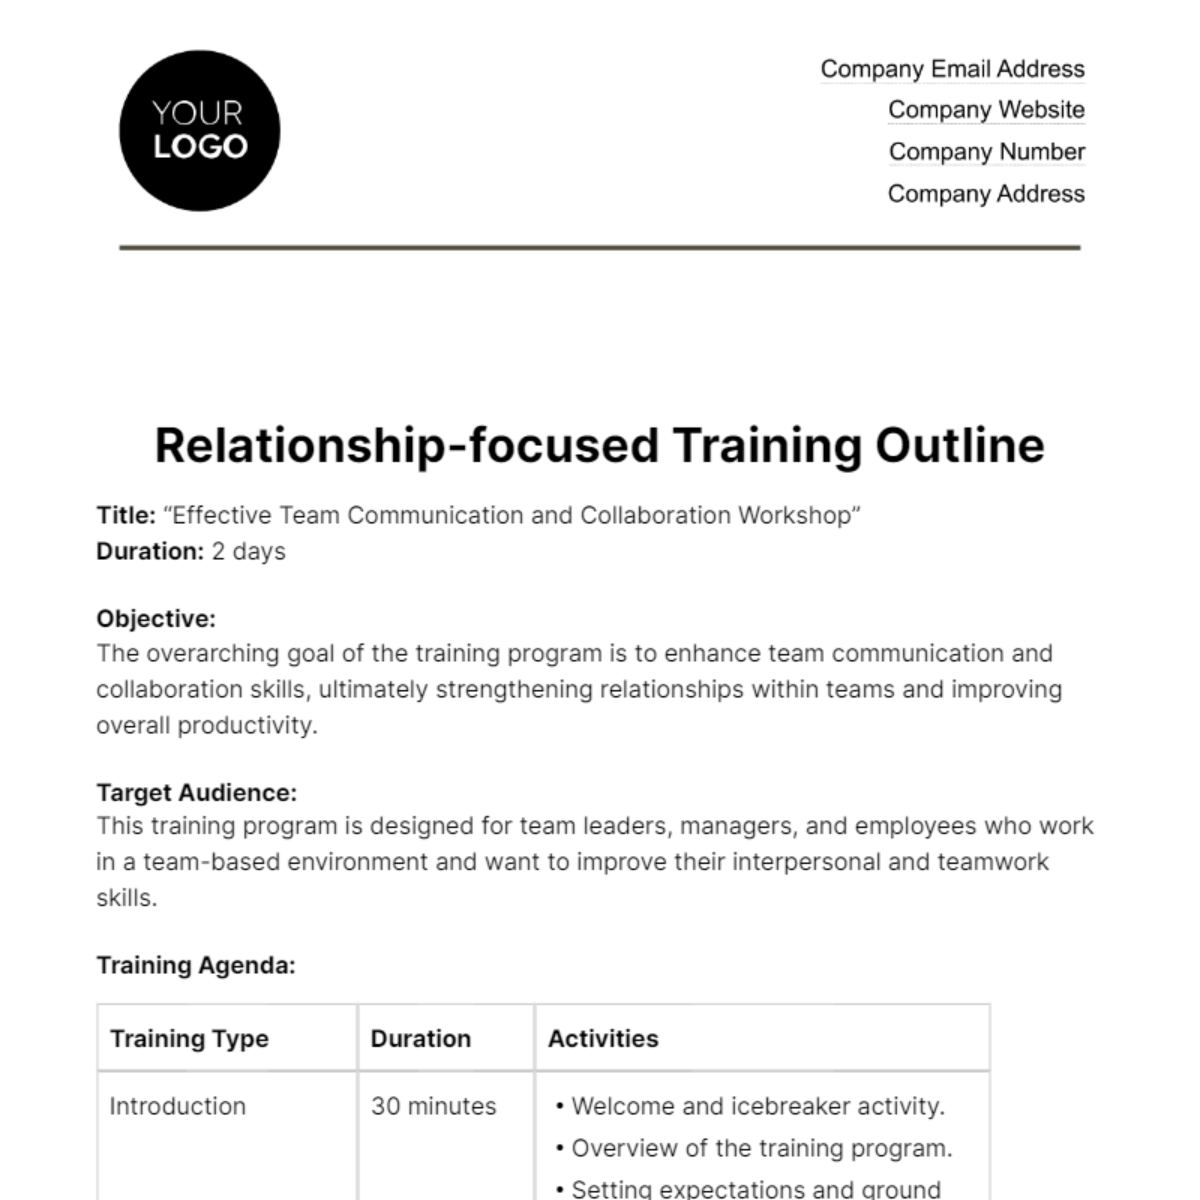 Relationship-focused Training Outline HR Template